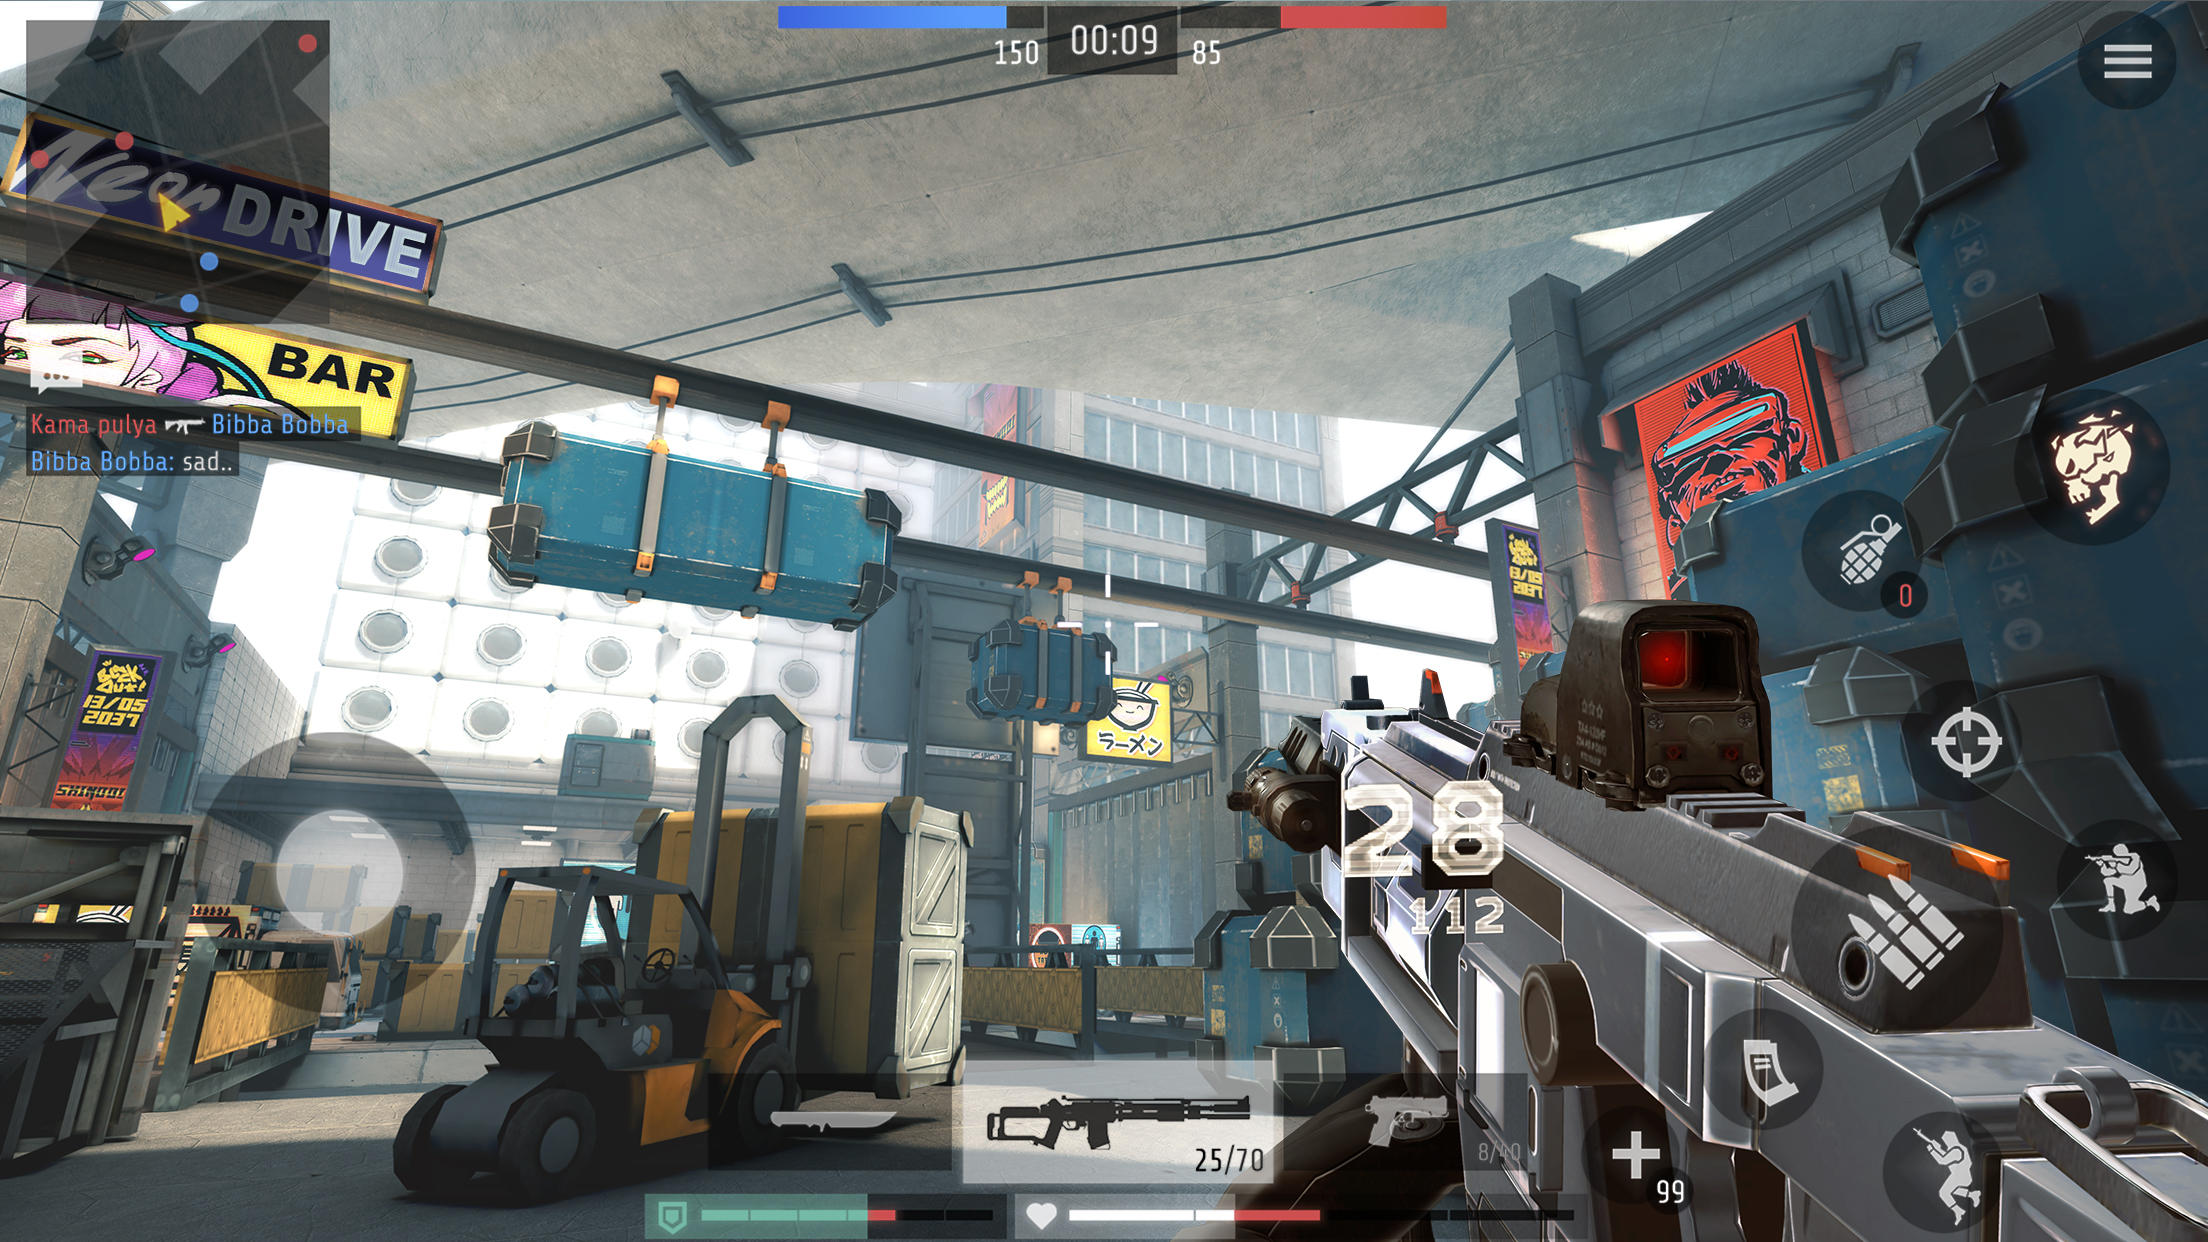 Screenshot 1 of Battle Forces juego de pistola 0.18.2